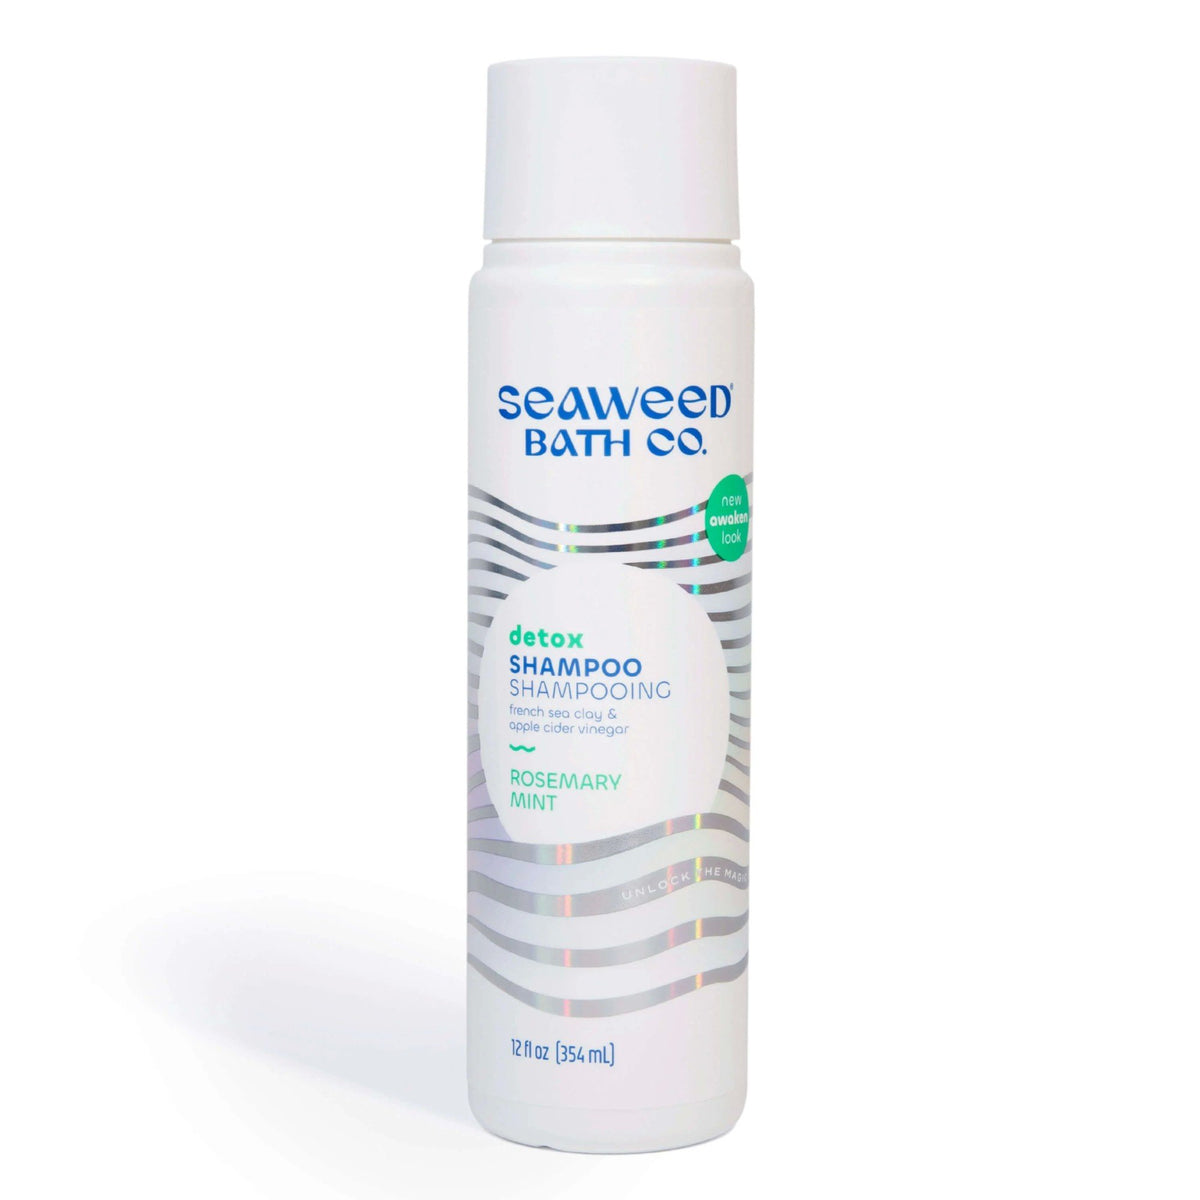 The Seaweed Bath Co. Detox Shampoo Rosemary Mint 12 oz Liquid